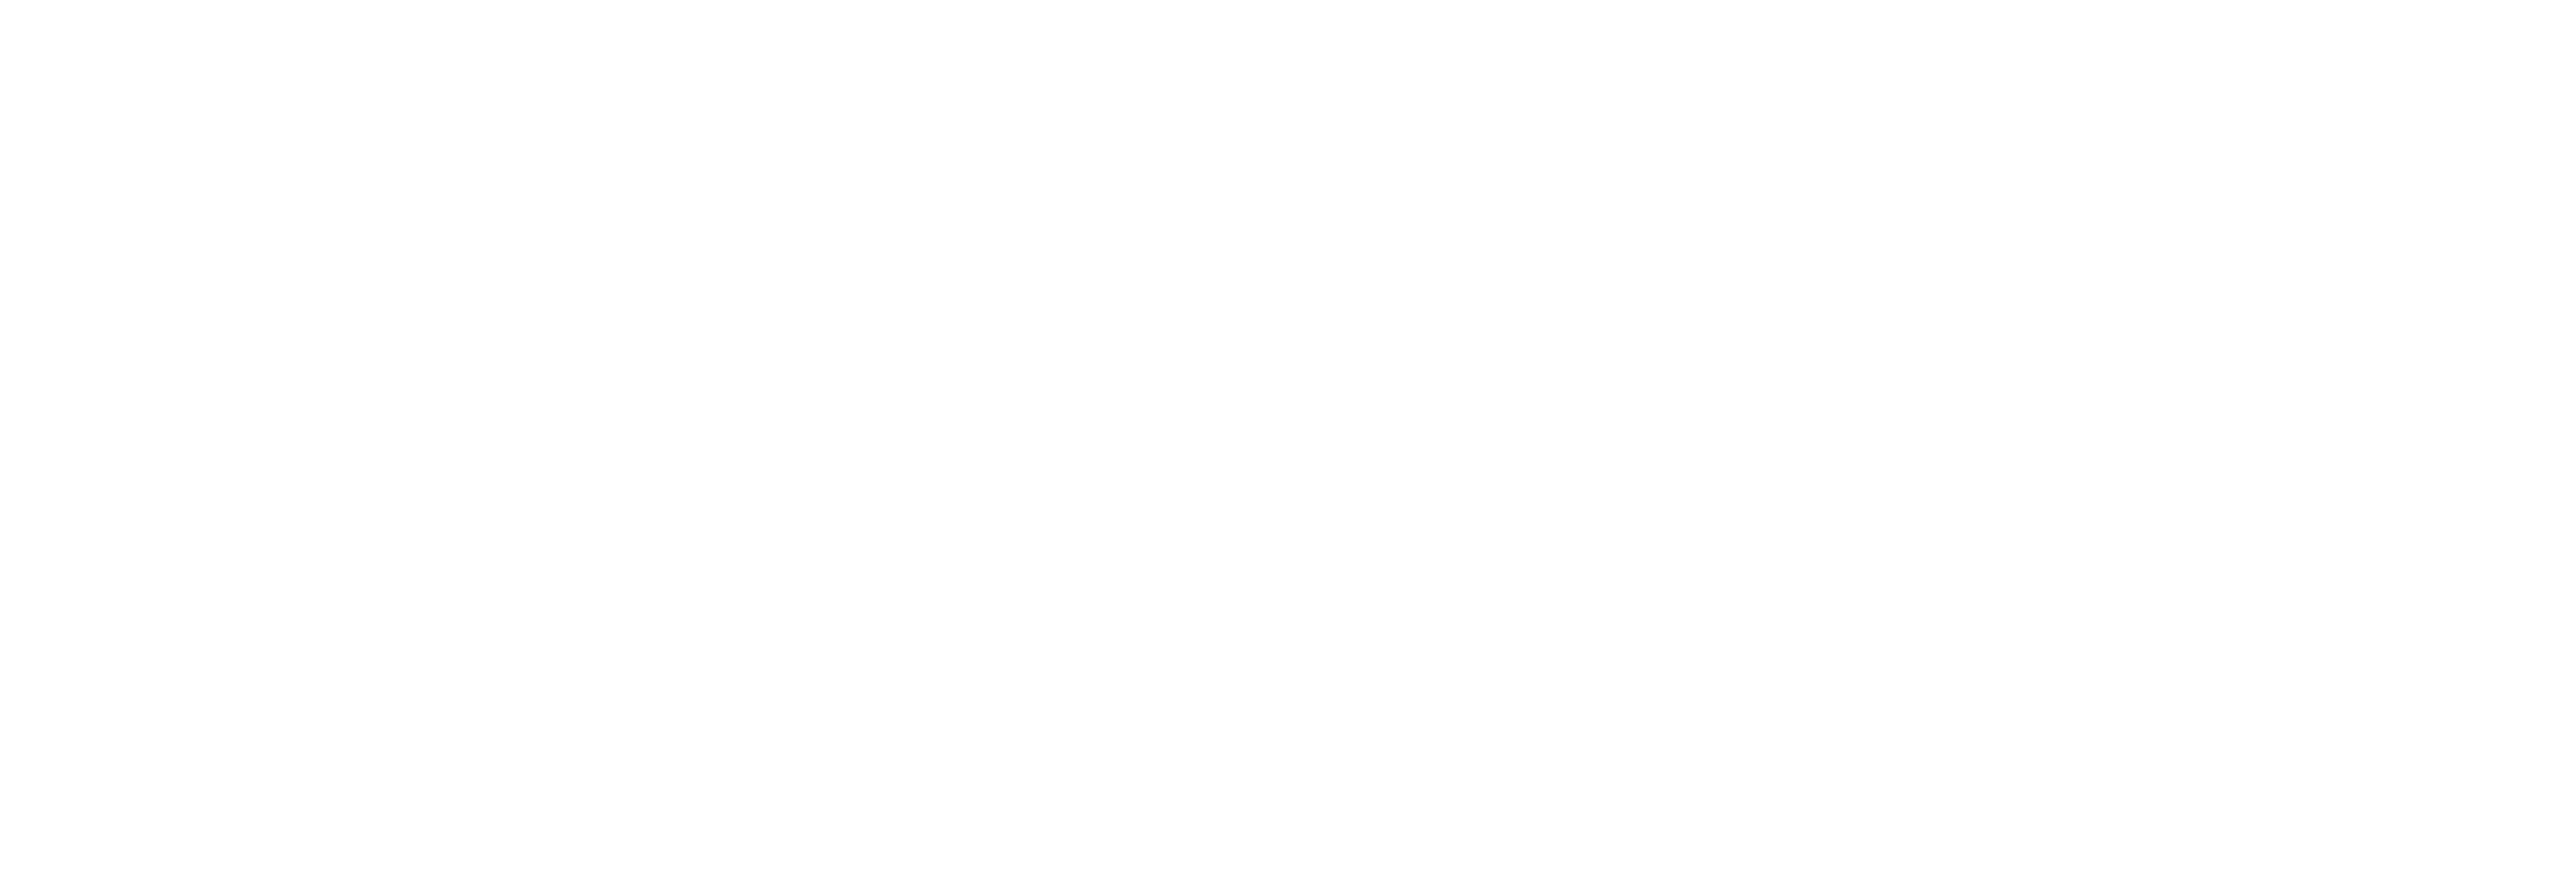 white cng logo